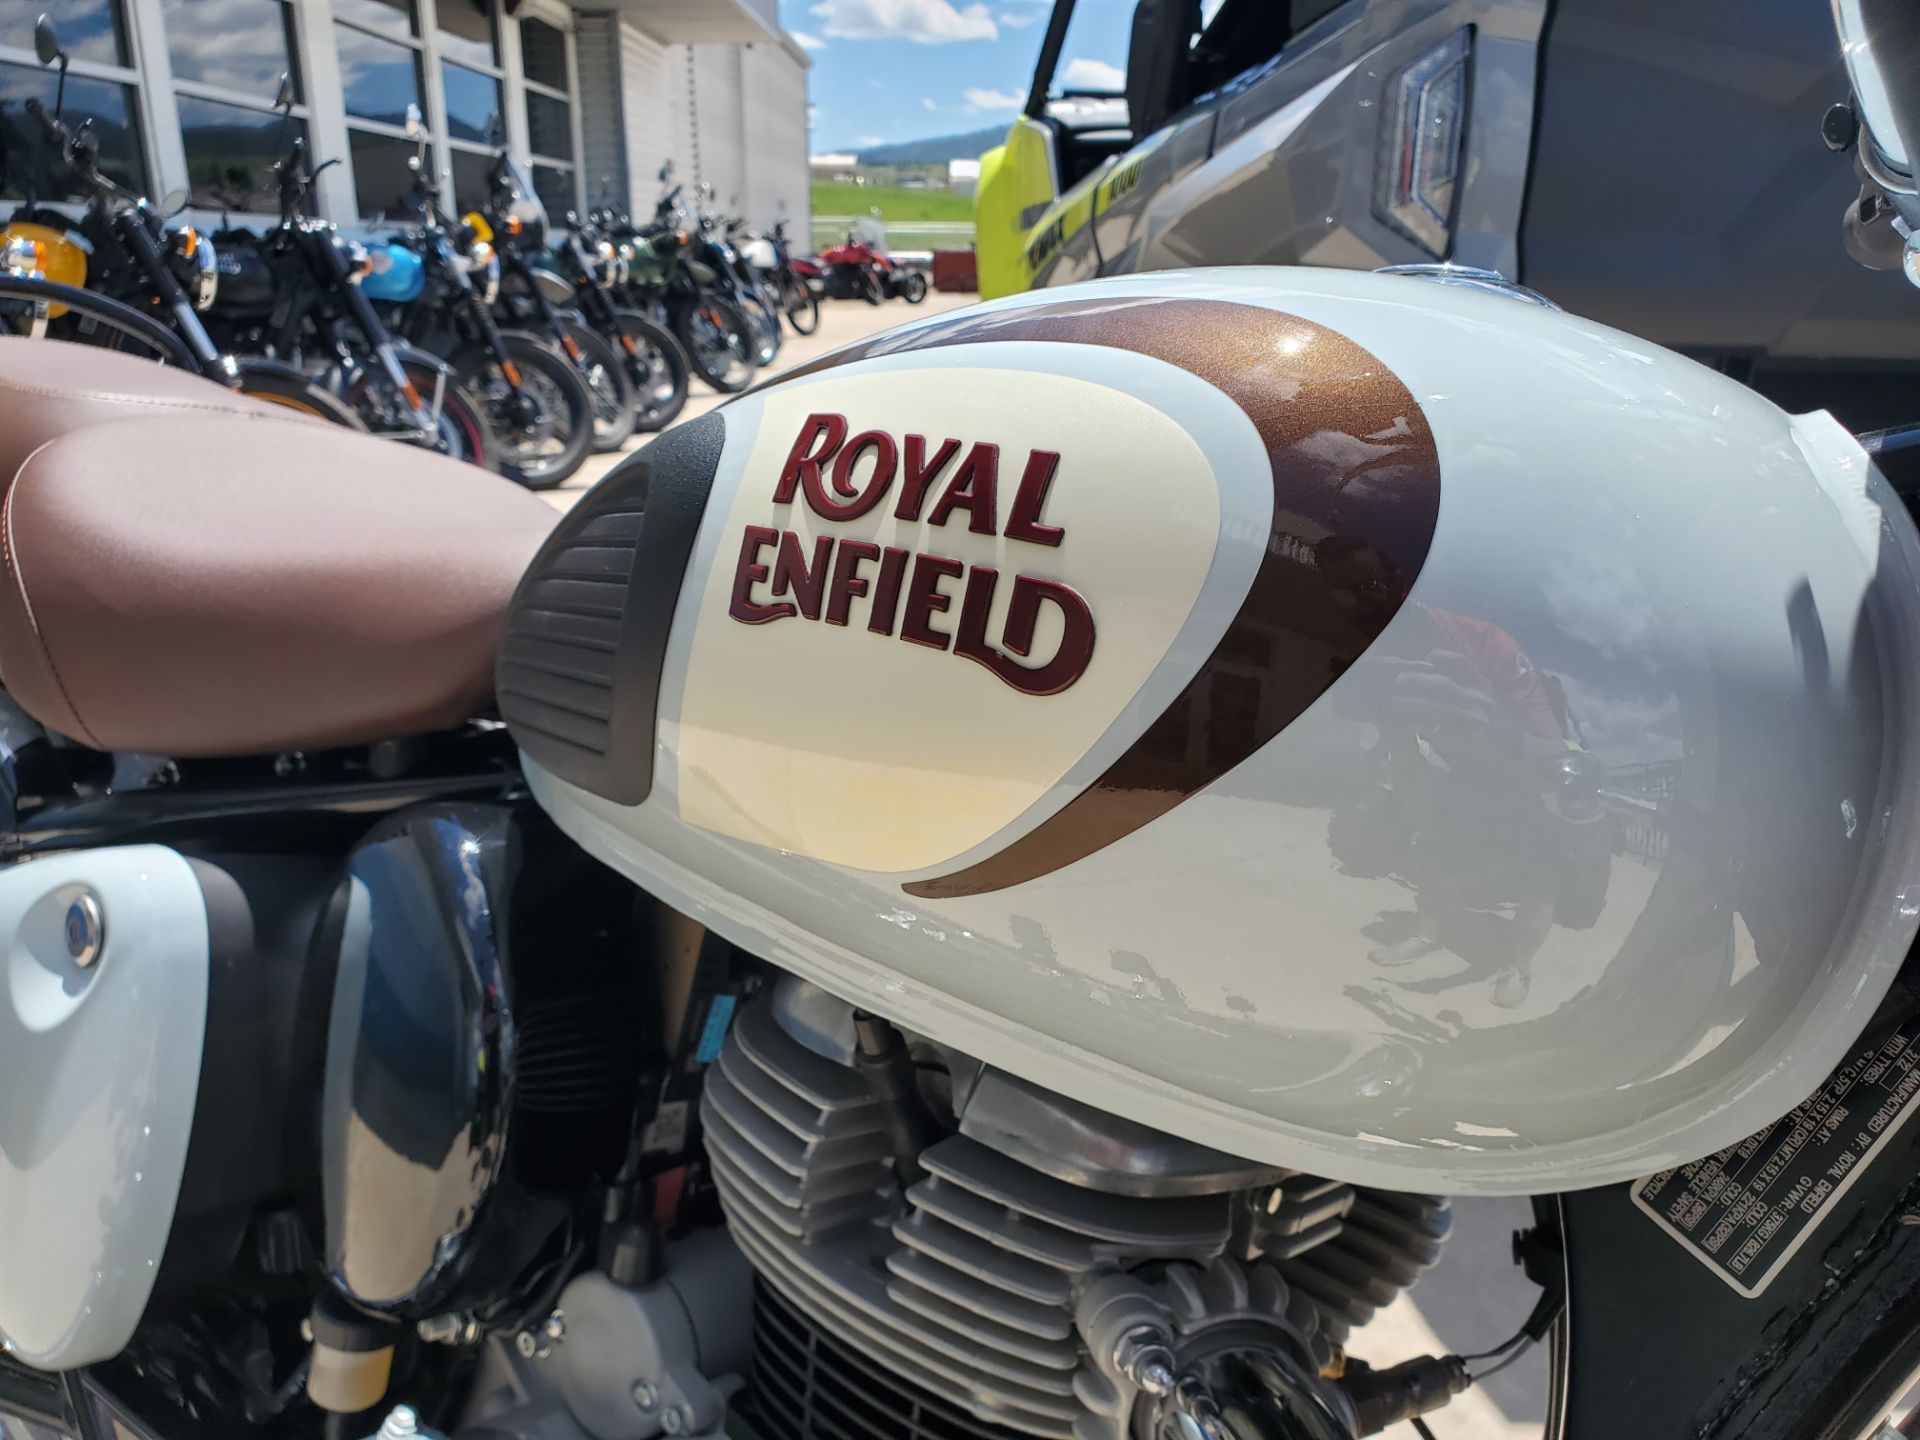 2022 Royal Enfield Classic 350 in Rapid City, South Dakota - Photo 2